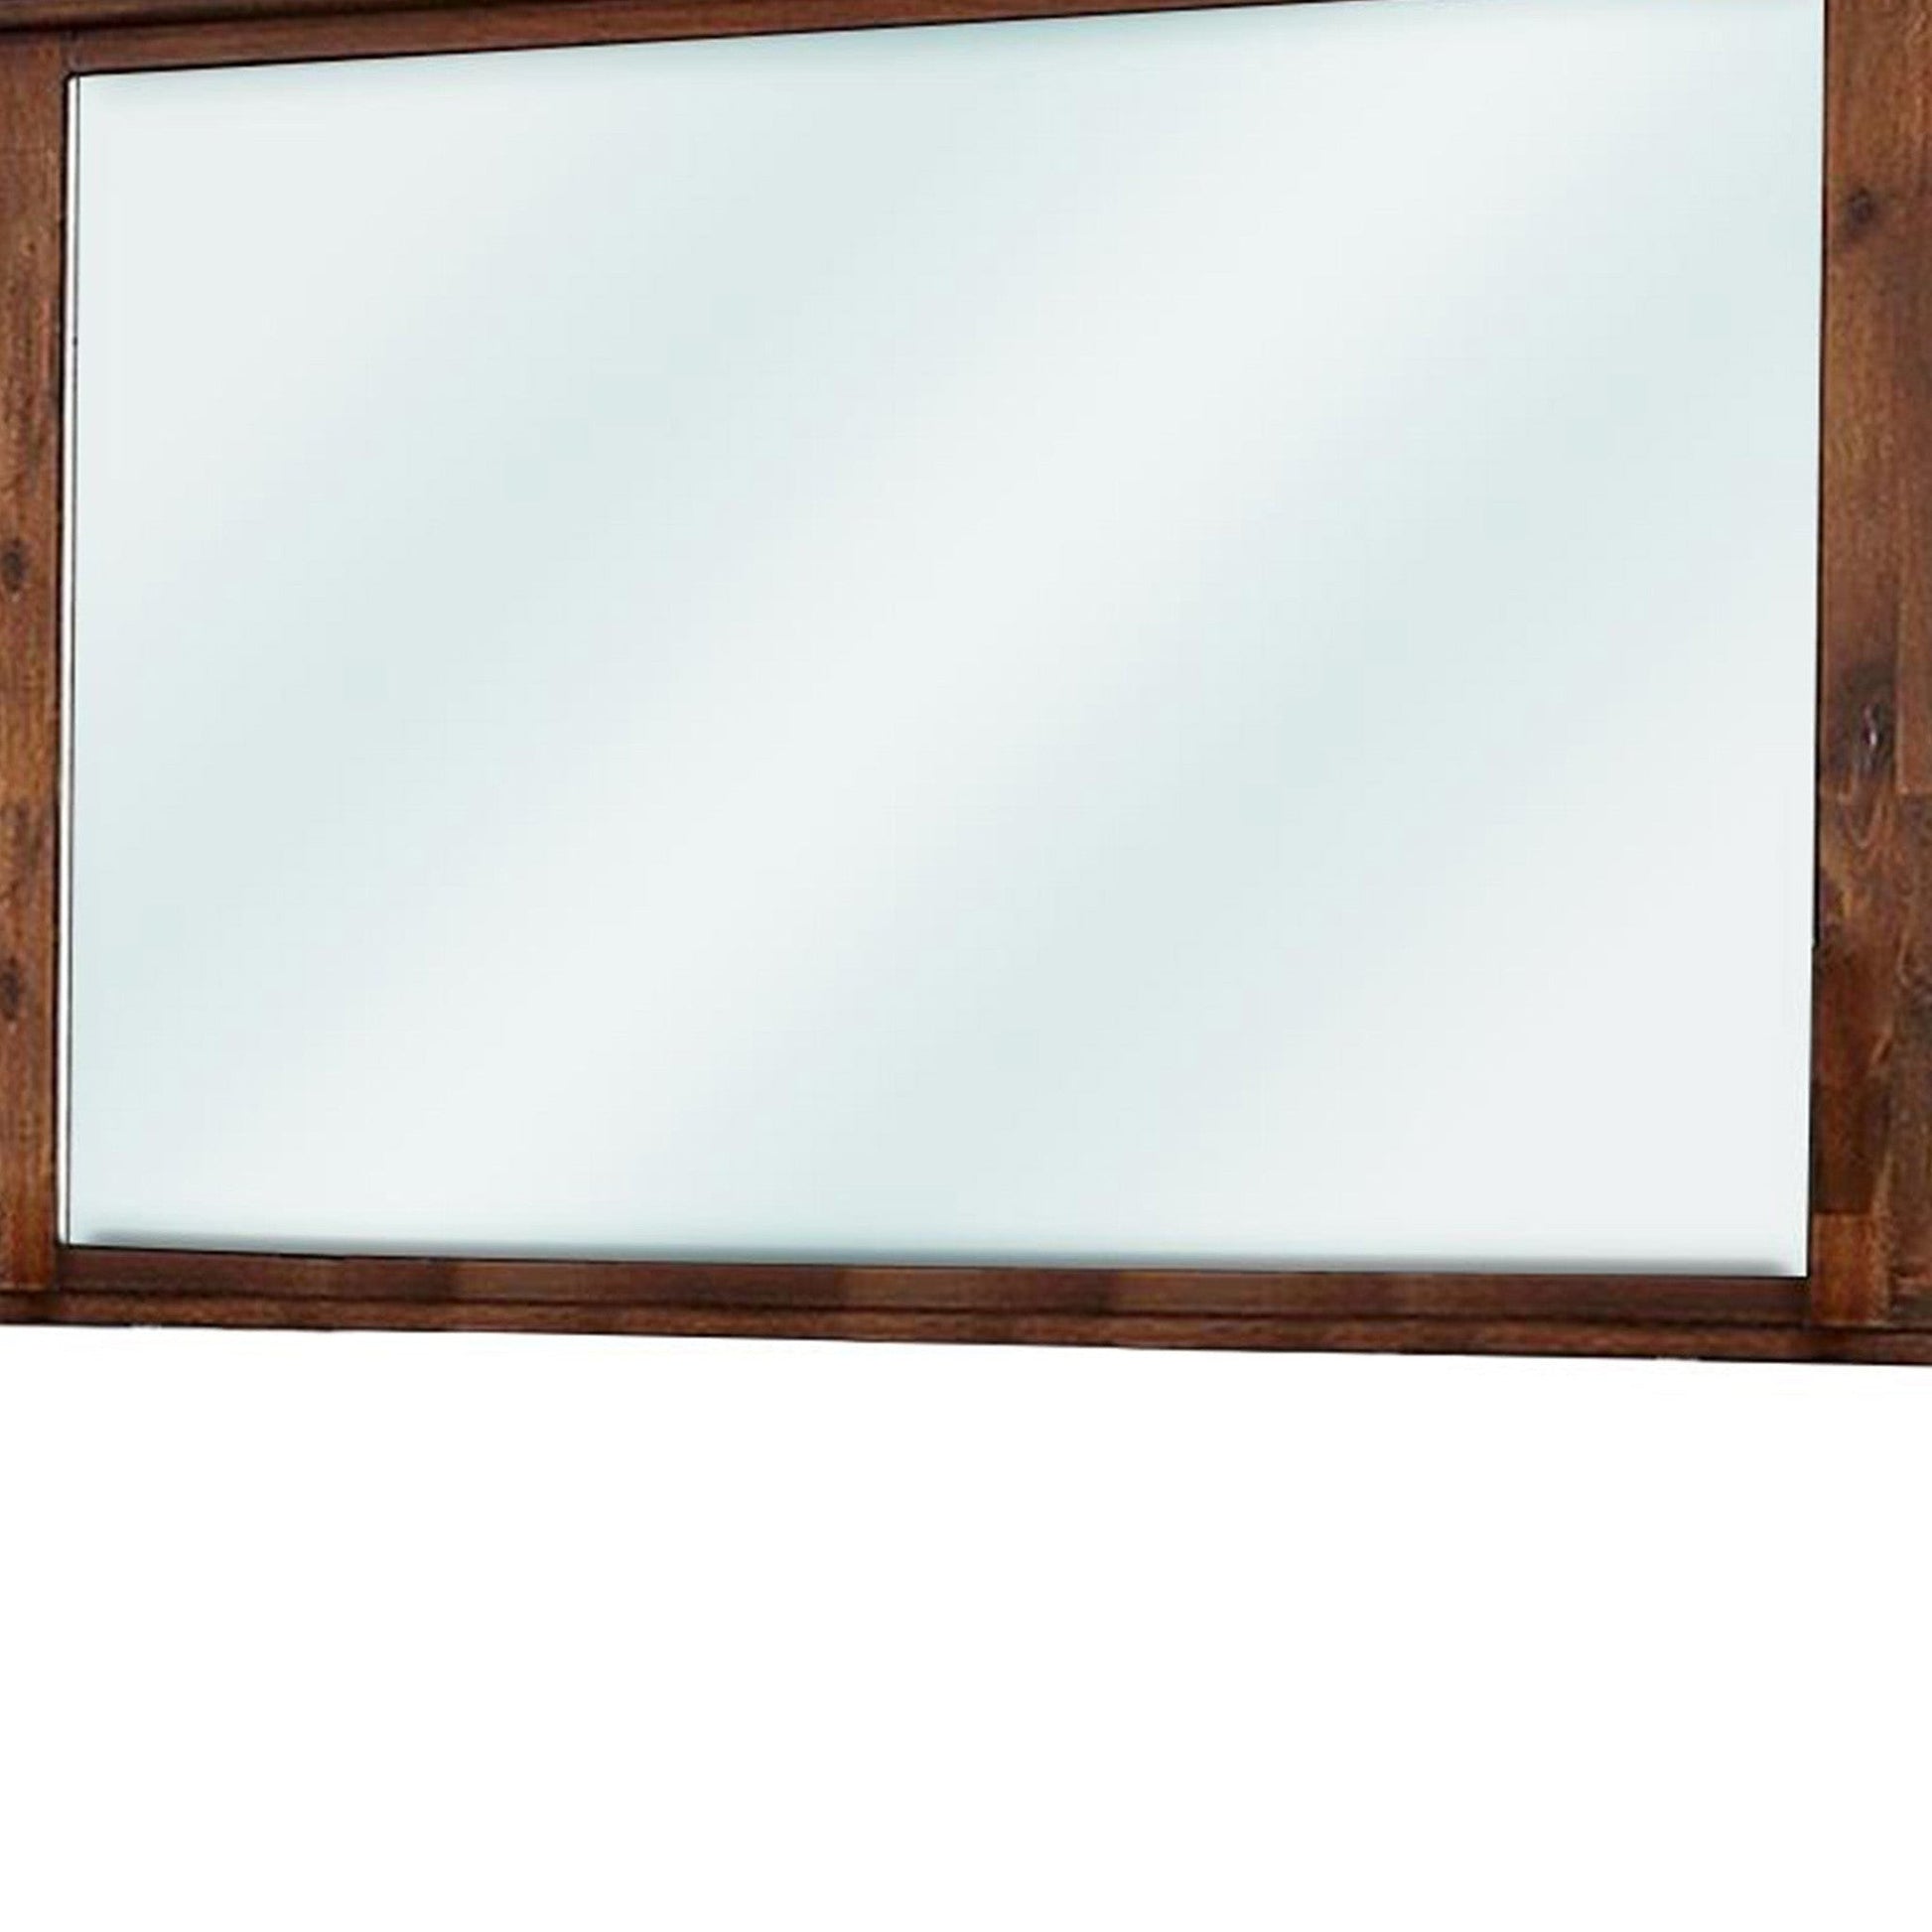 Benzara 45" Brown Transitional Style Wooden Frame Mirror